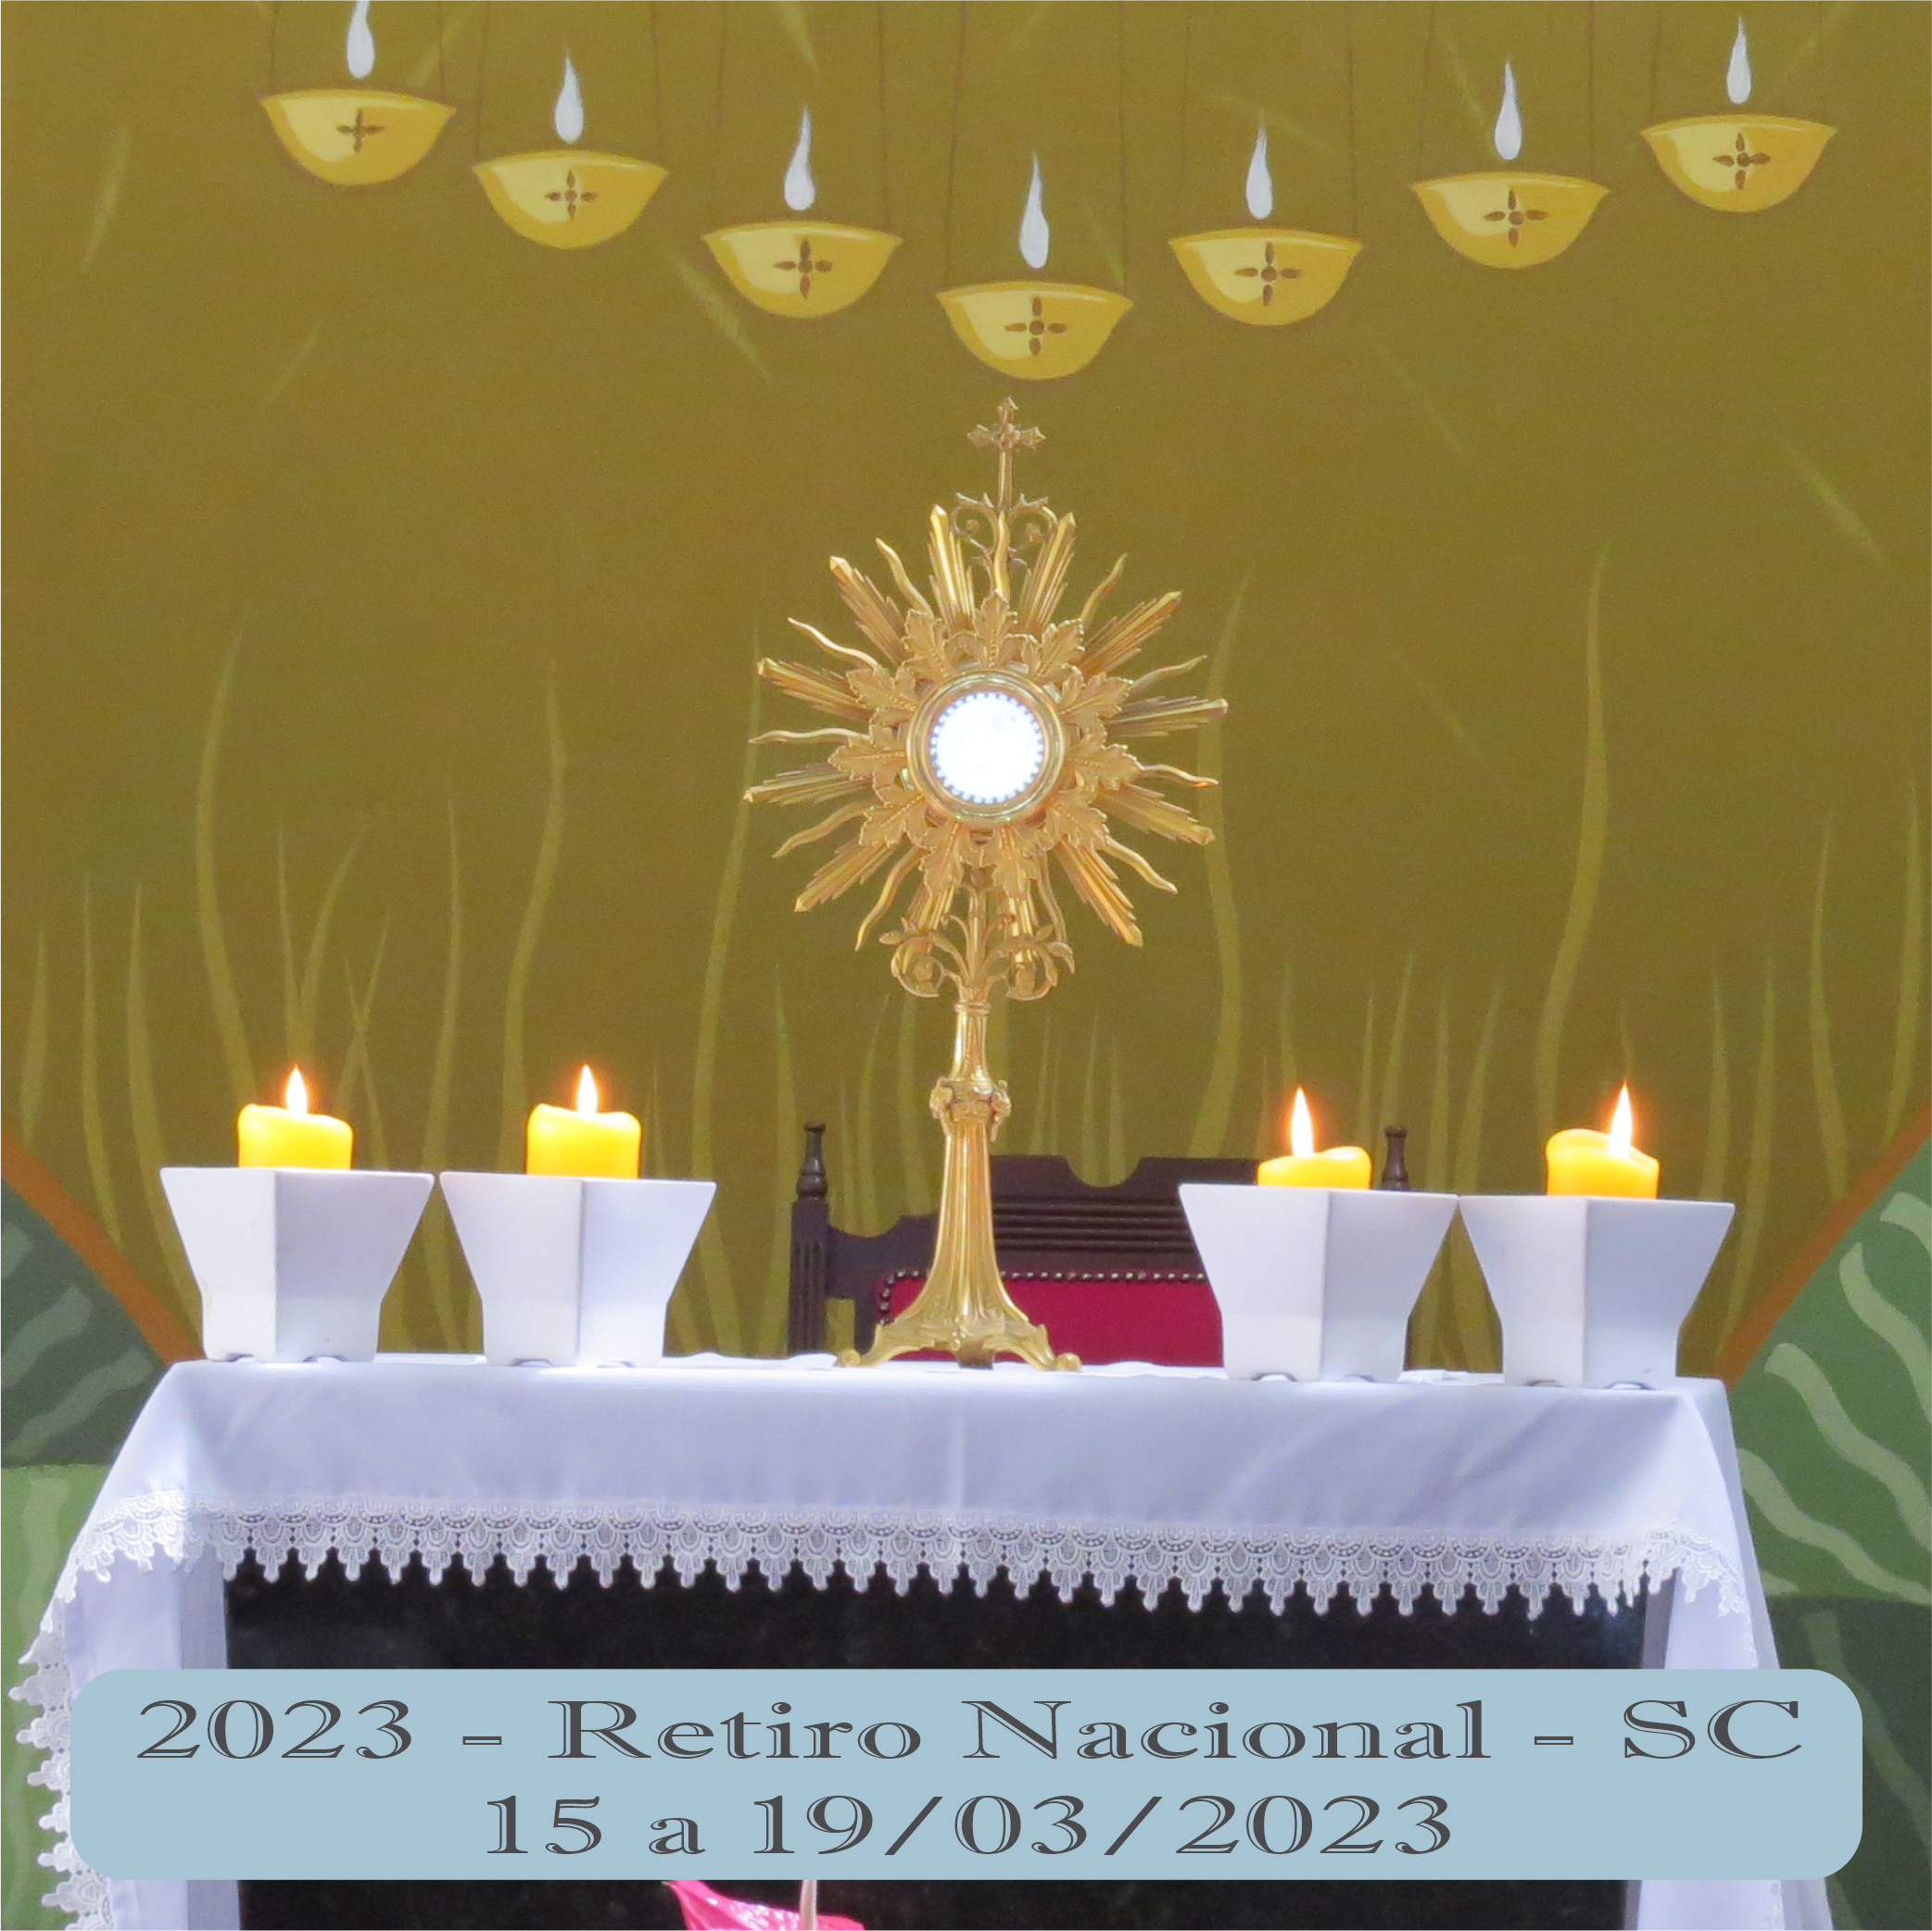 2023-Retiro Nacional - SC